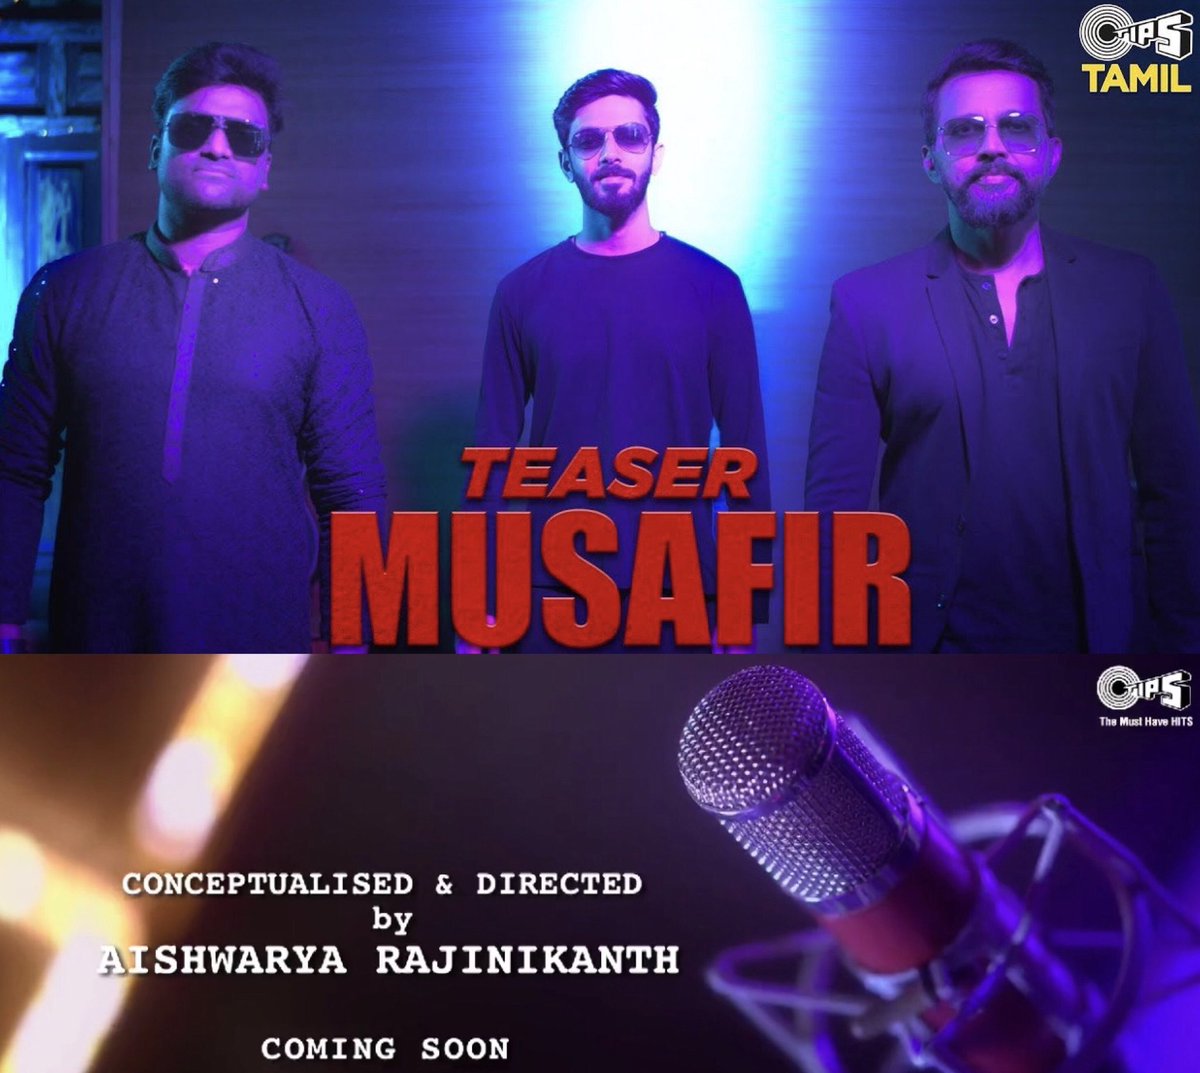 #Musafir Song Teaser

youtu.be/8GbzpeqyUN8

Directed By Aishwaryaa Rajinikanth 

Sung by Anirudh, RanjithGovind, Sagar

Full Song Coming Soon In Tamil, Telugu & Malayalam